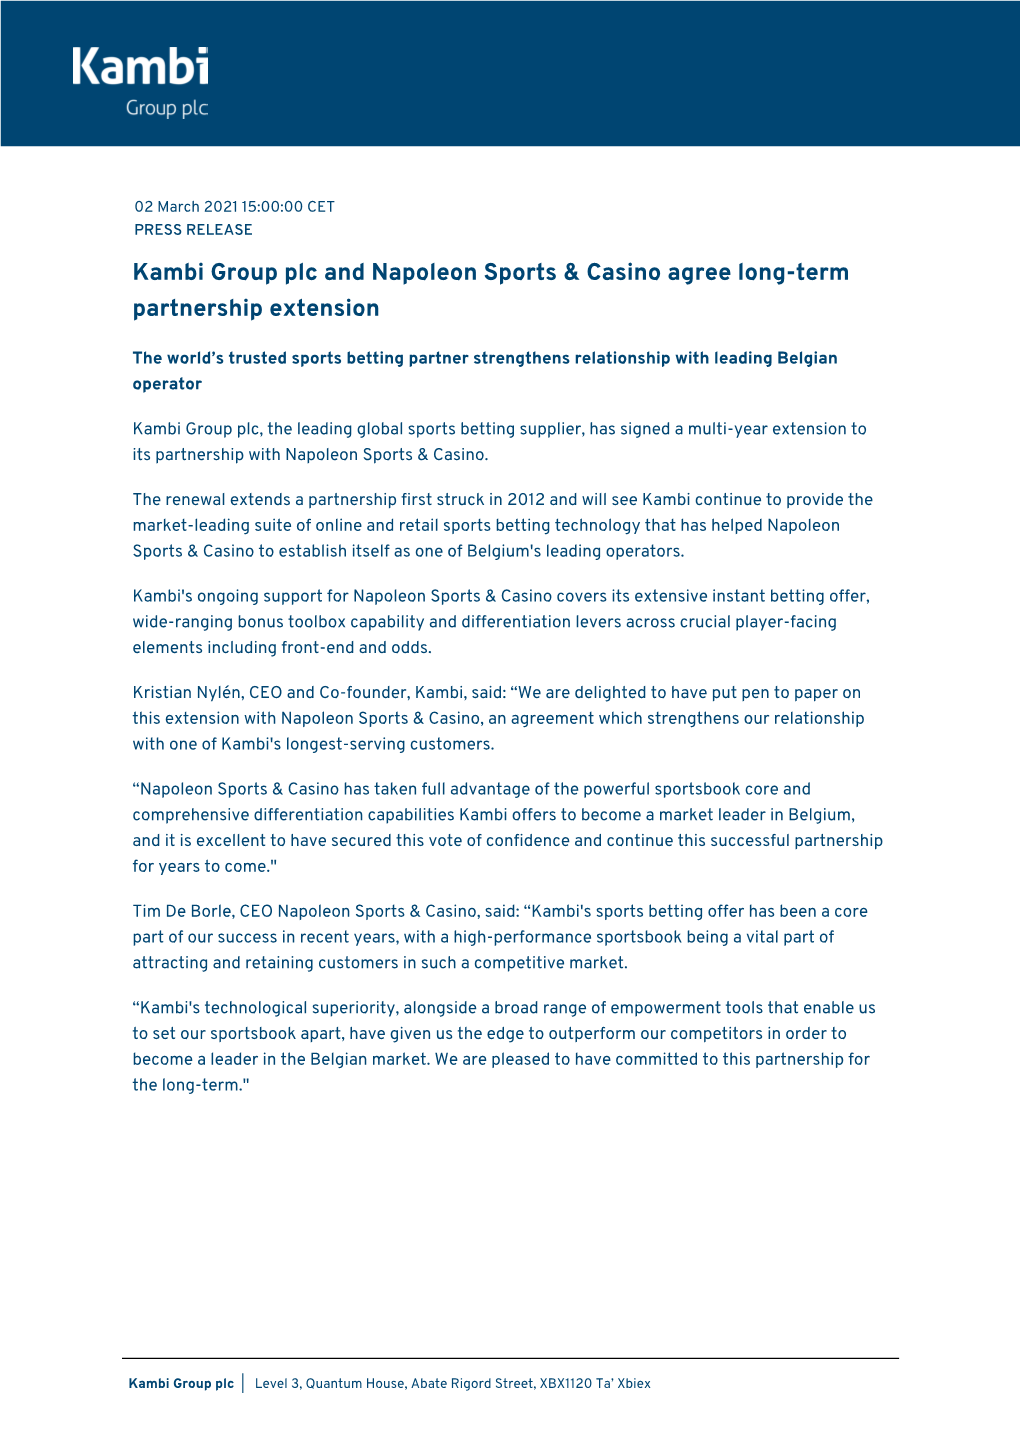 Kambi Group Plc and Napoleon Sports & Casino Agree Long-Term Partnership Extension